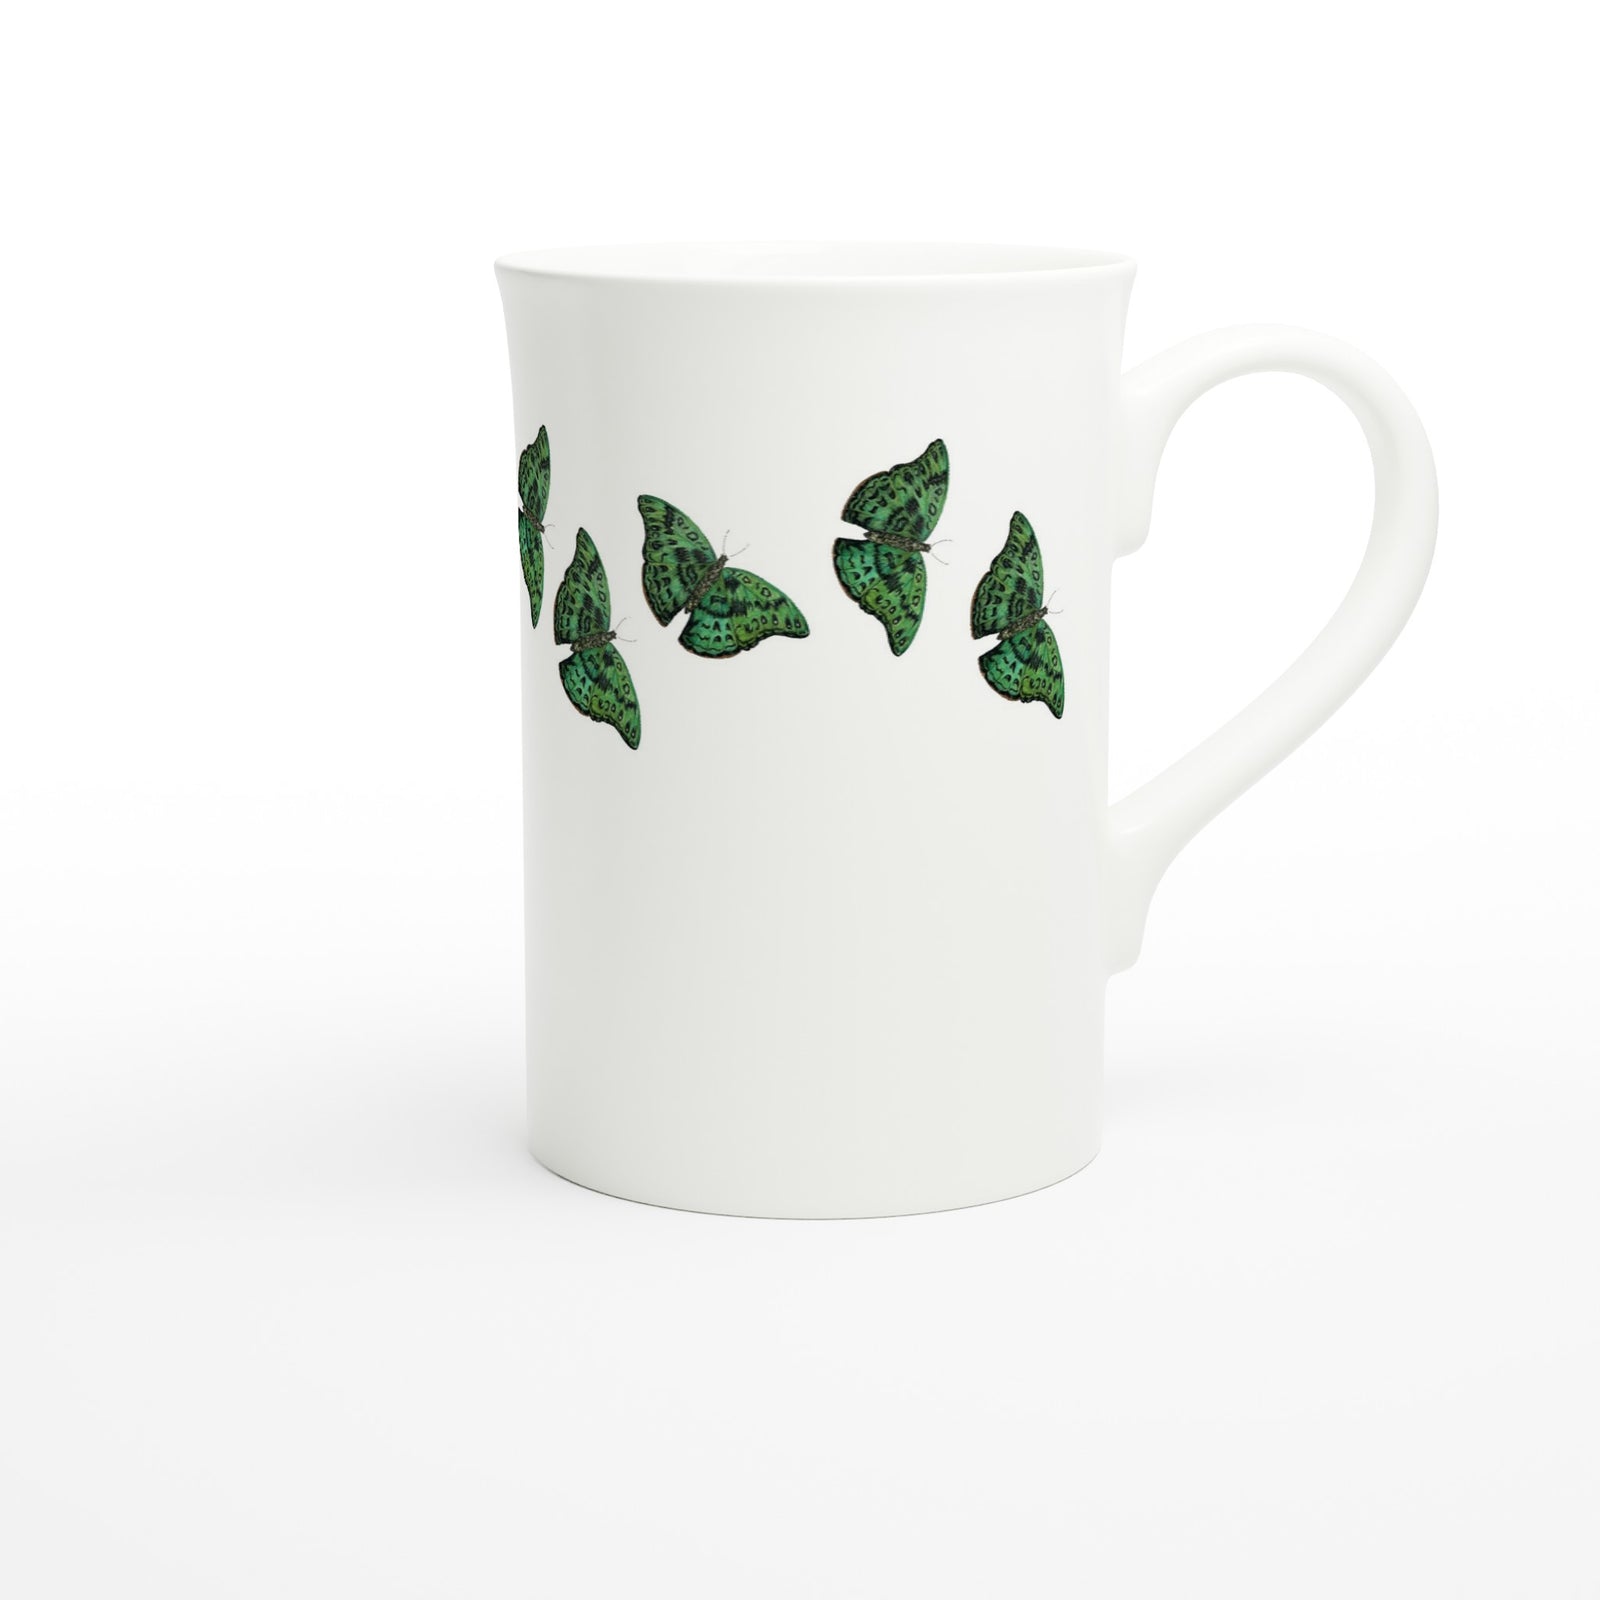 10 oz slim porcelain mug african green butterfly pattern